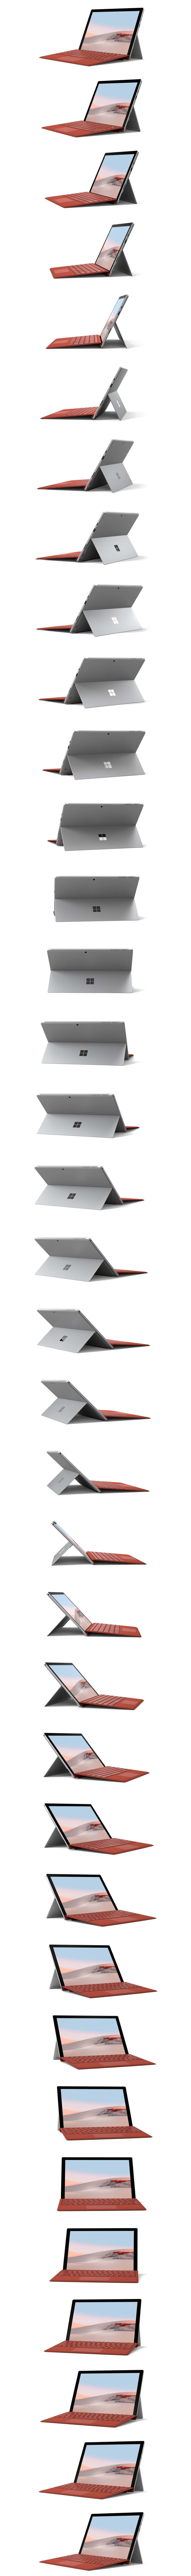 Surface Pro 7 360 rotation